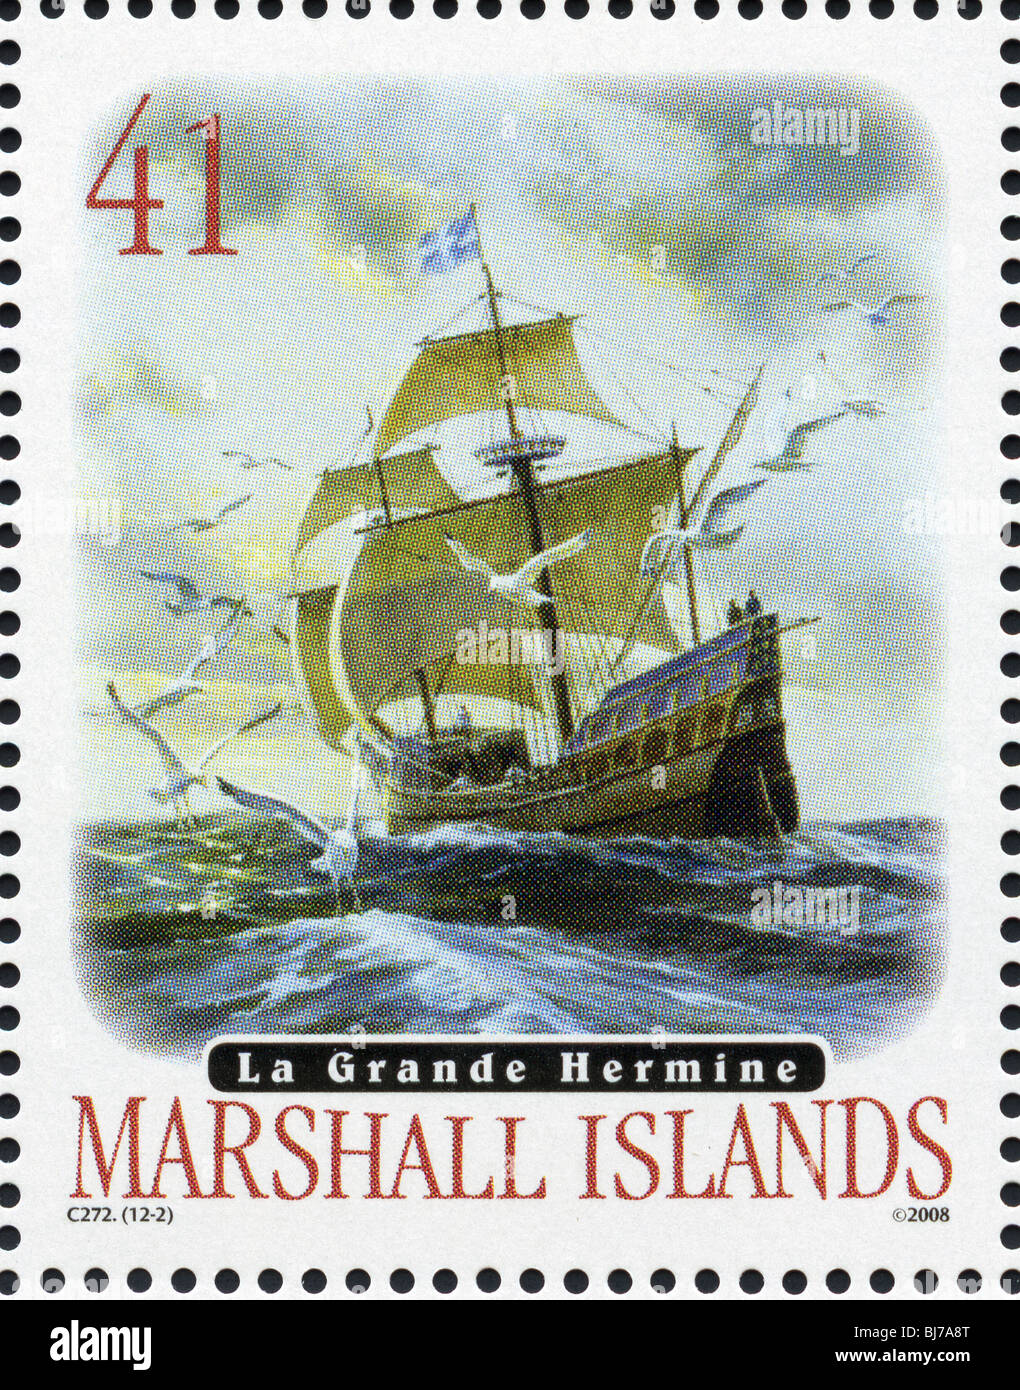 Marshall Islands postage stamp Stock Photo